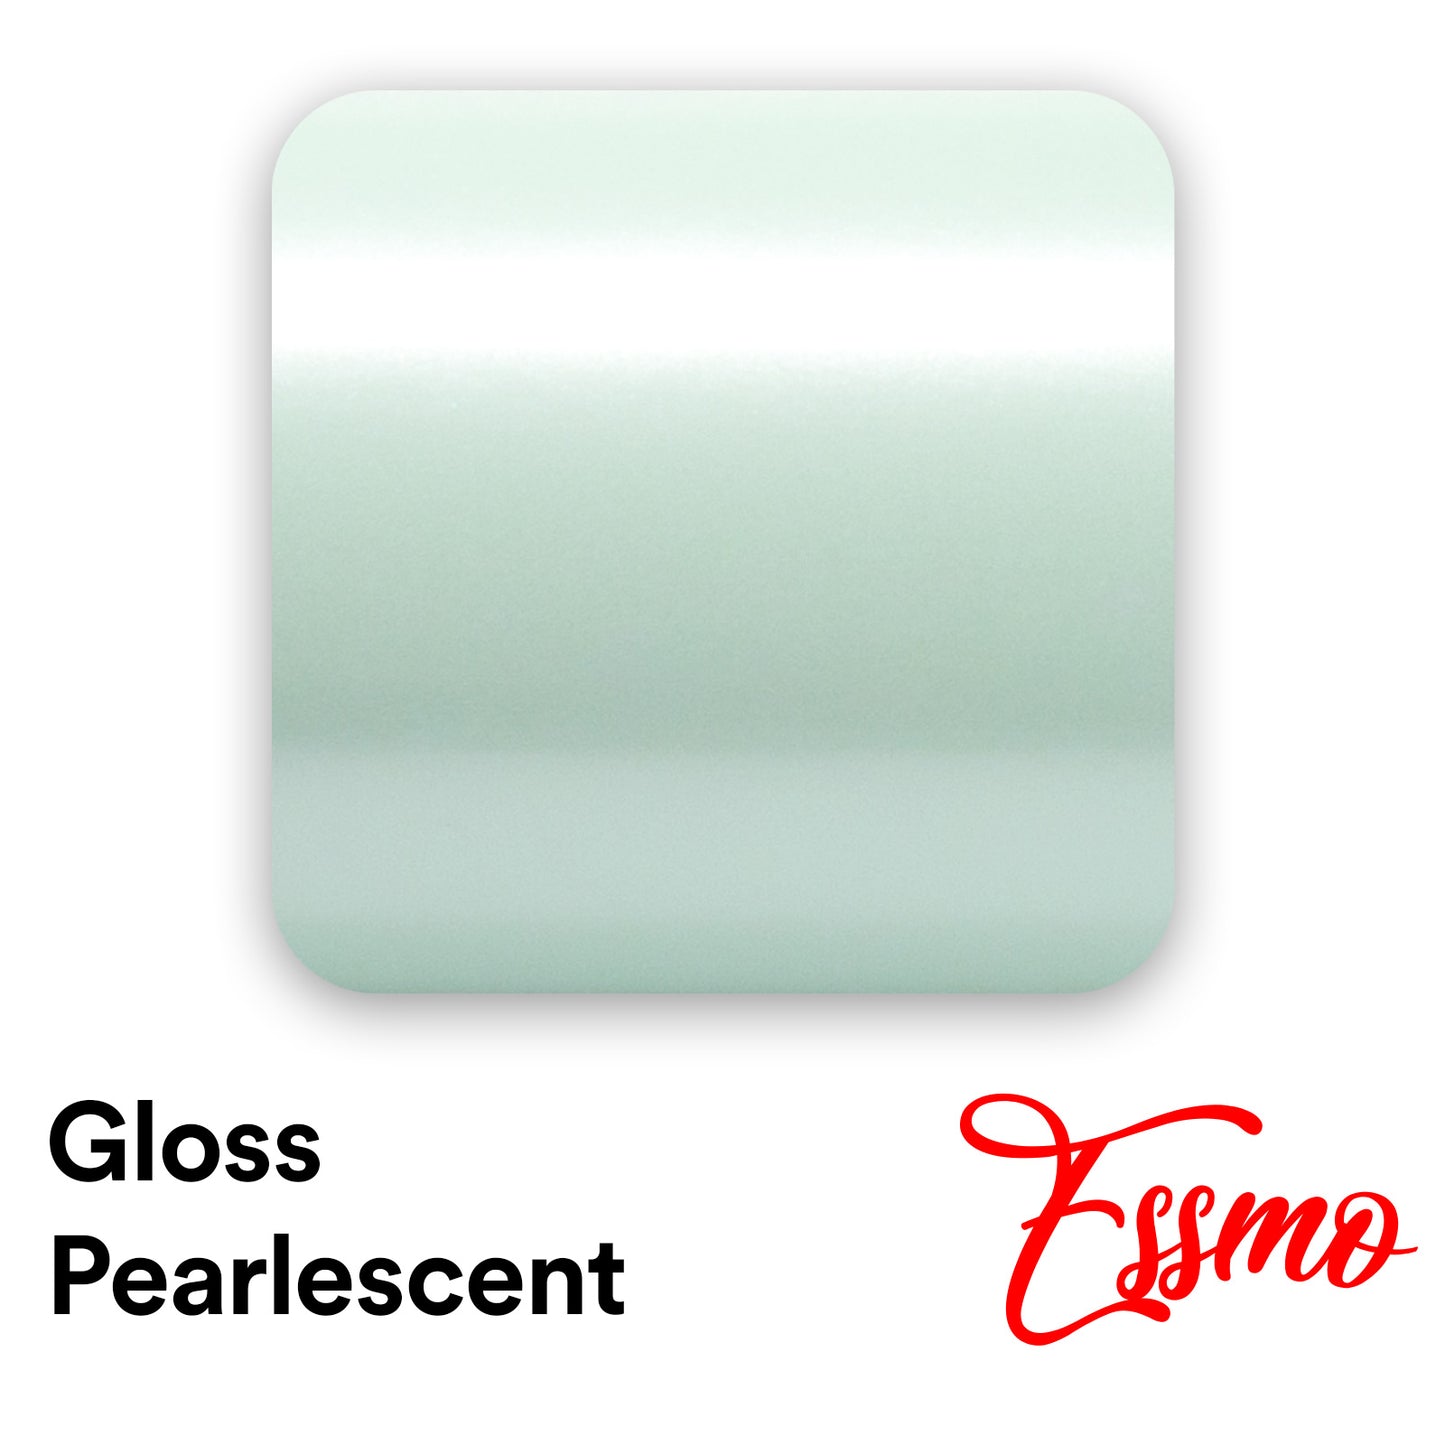 Gloss Pearlescent Jade Green Vinyl Wrap